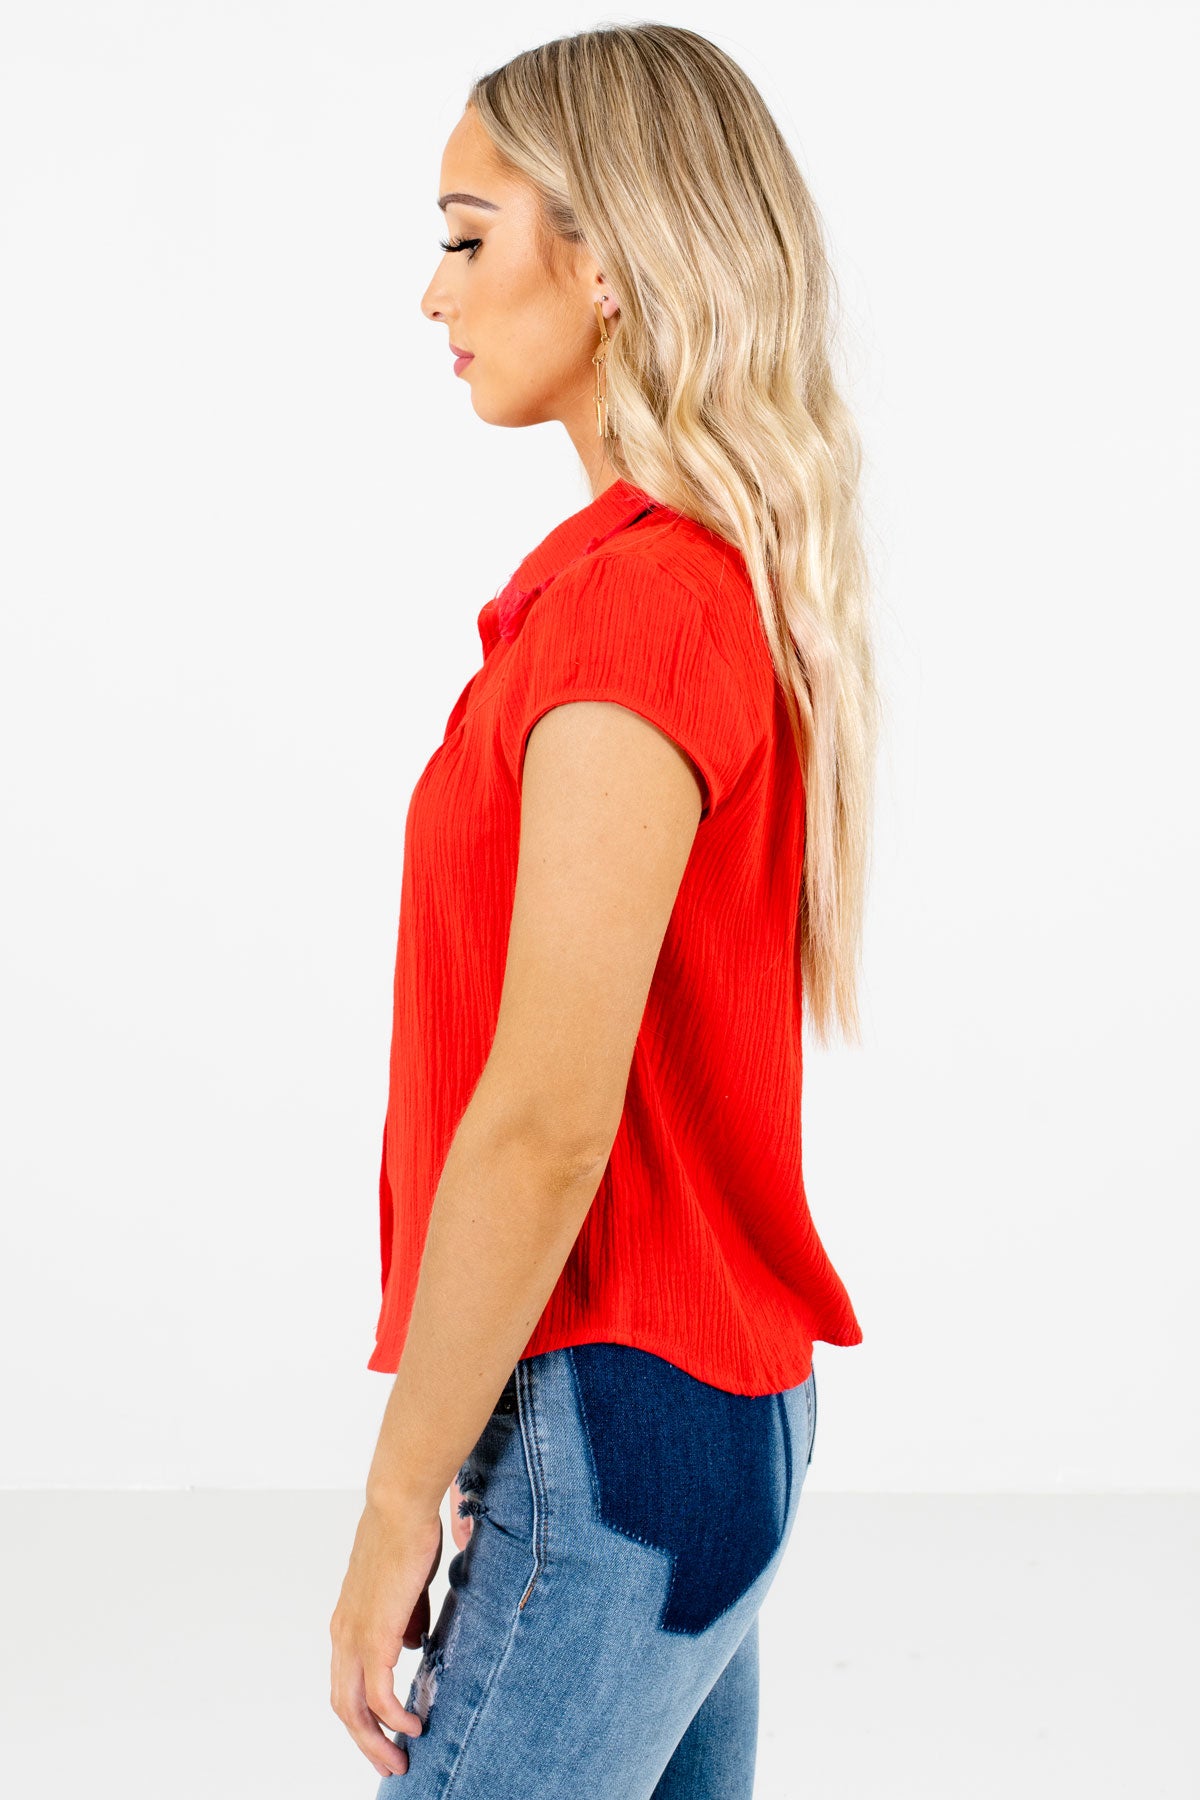 Red V-Neckline Boutique Shirts for Women